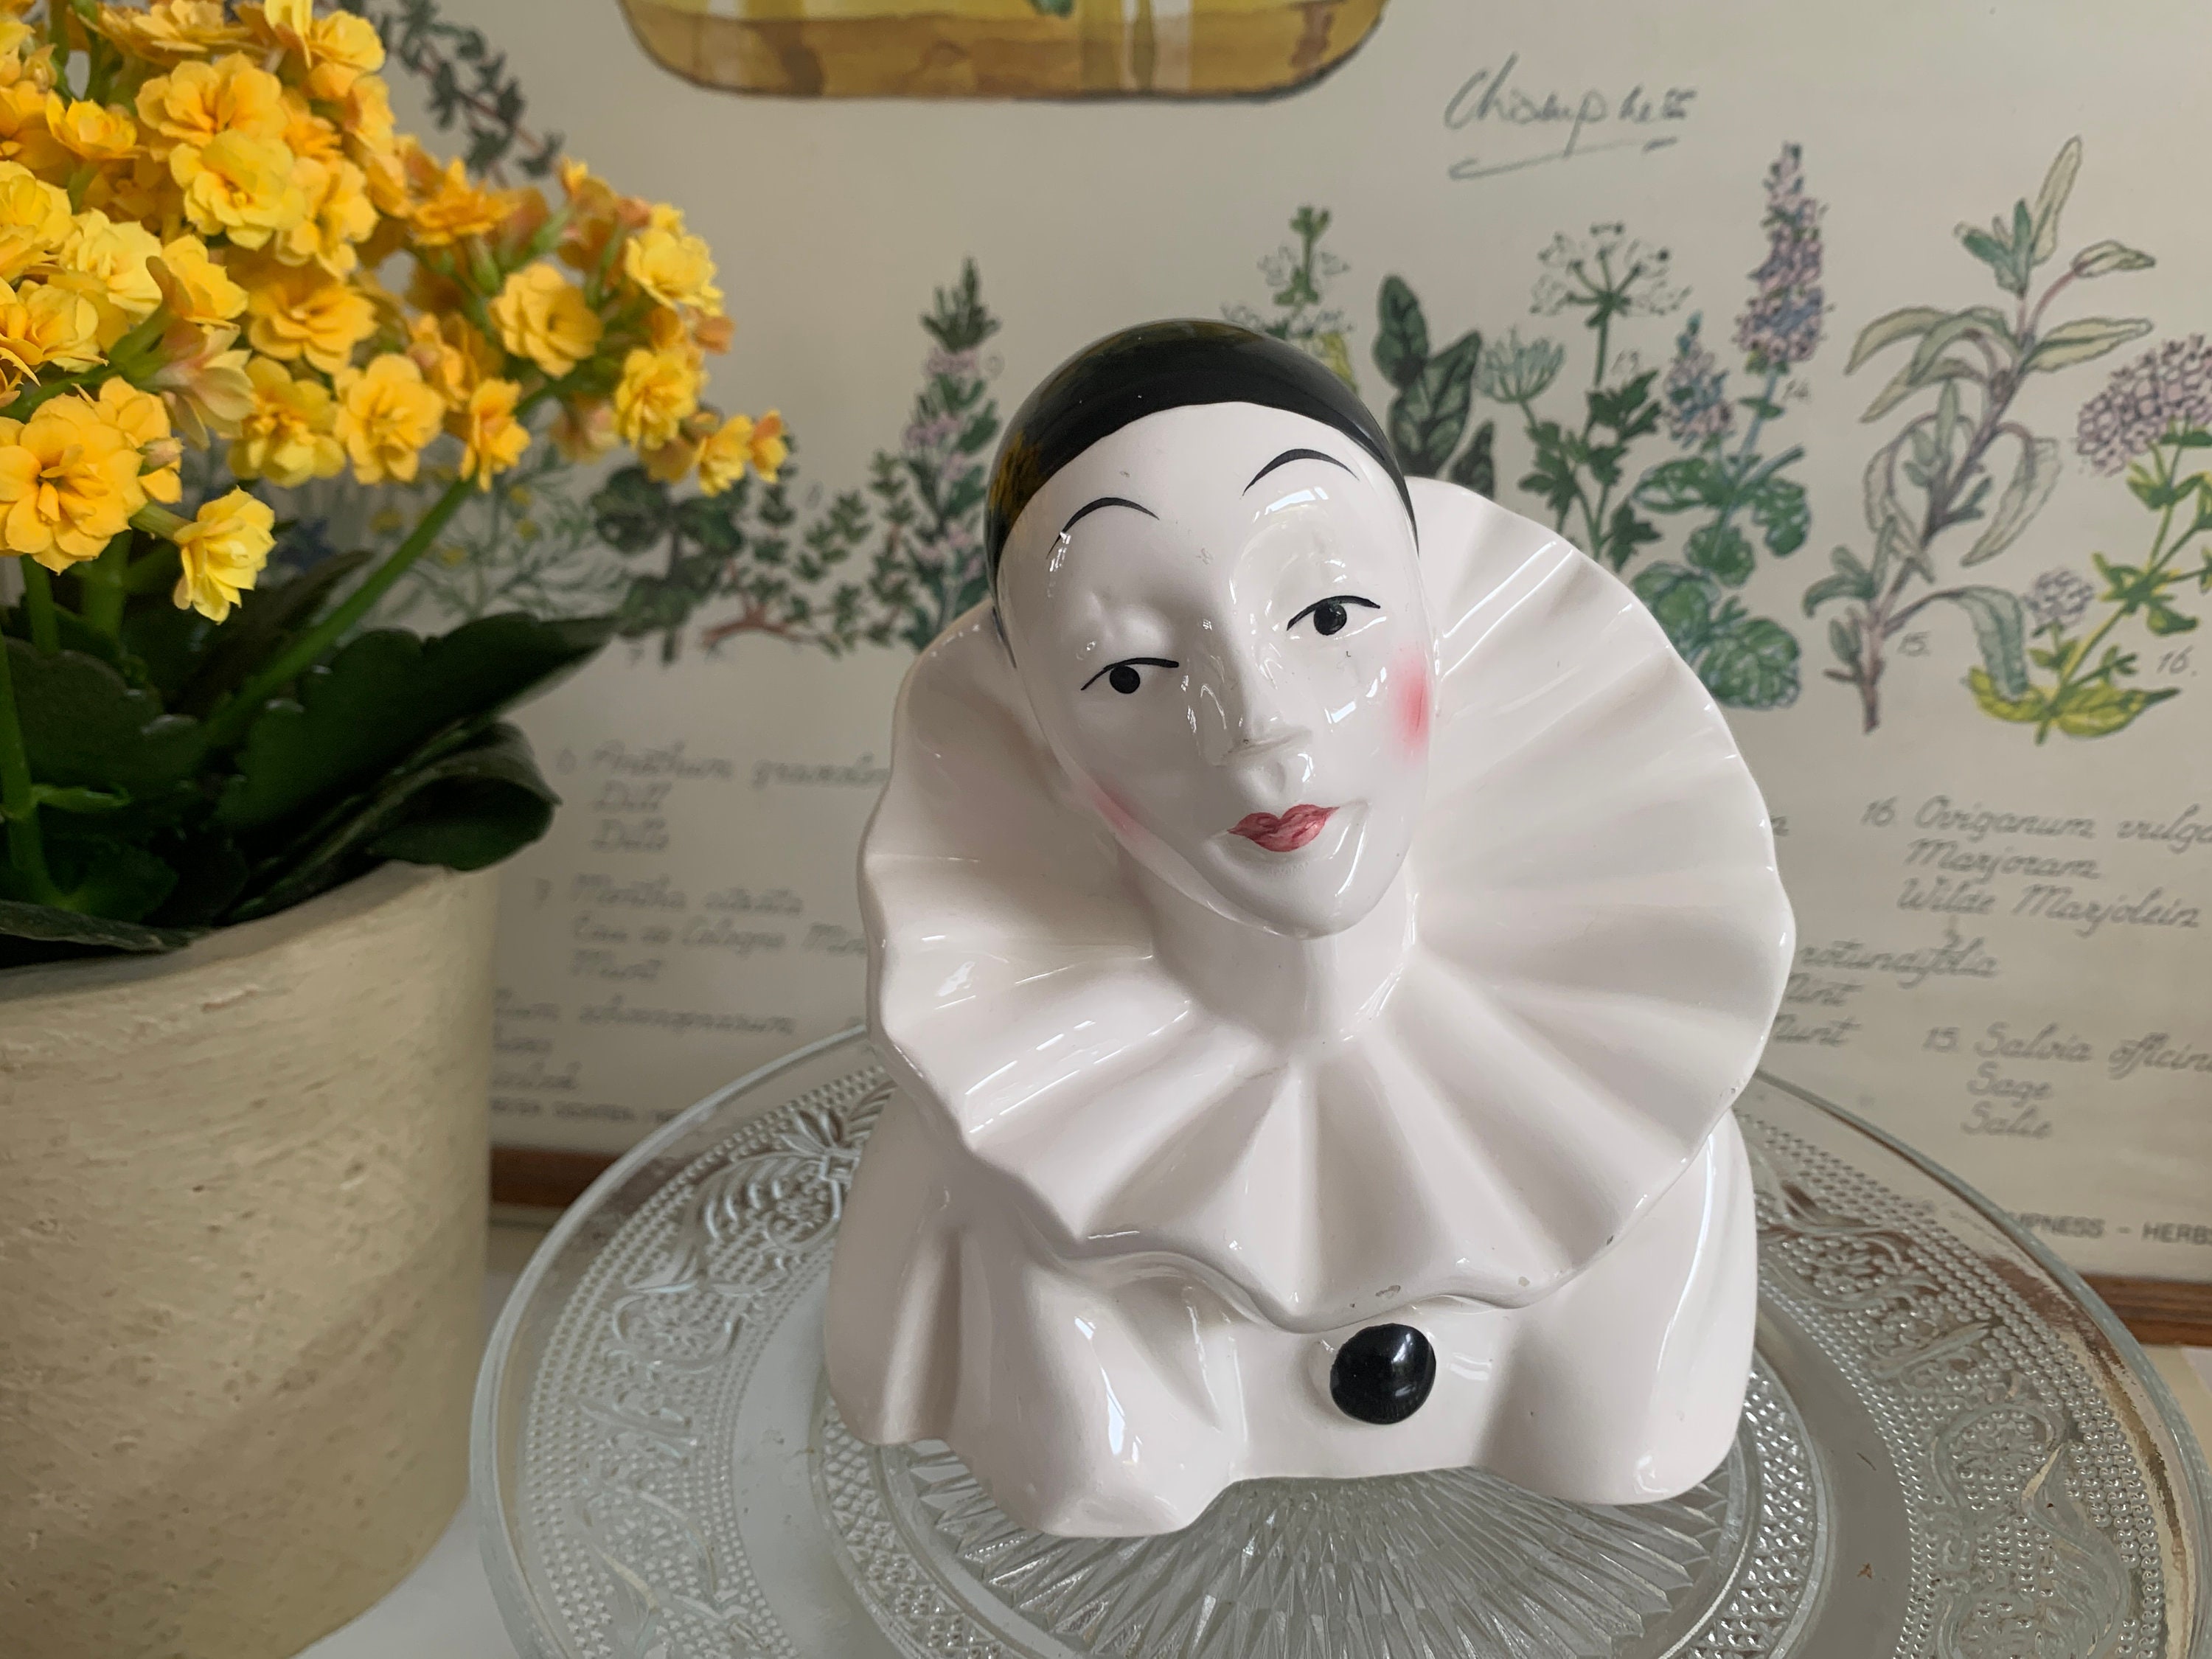 Pierrot Gourmand ceramic bust